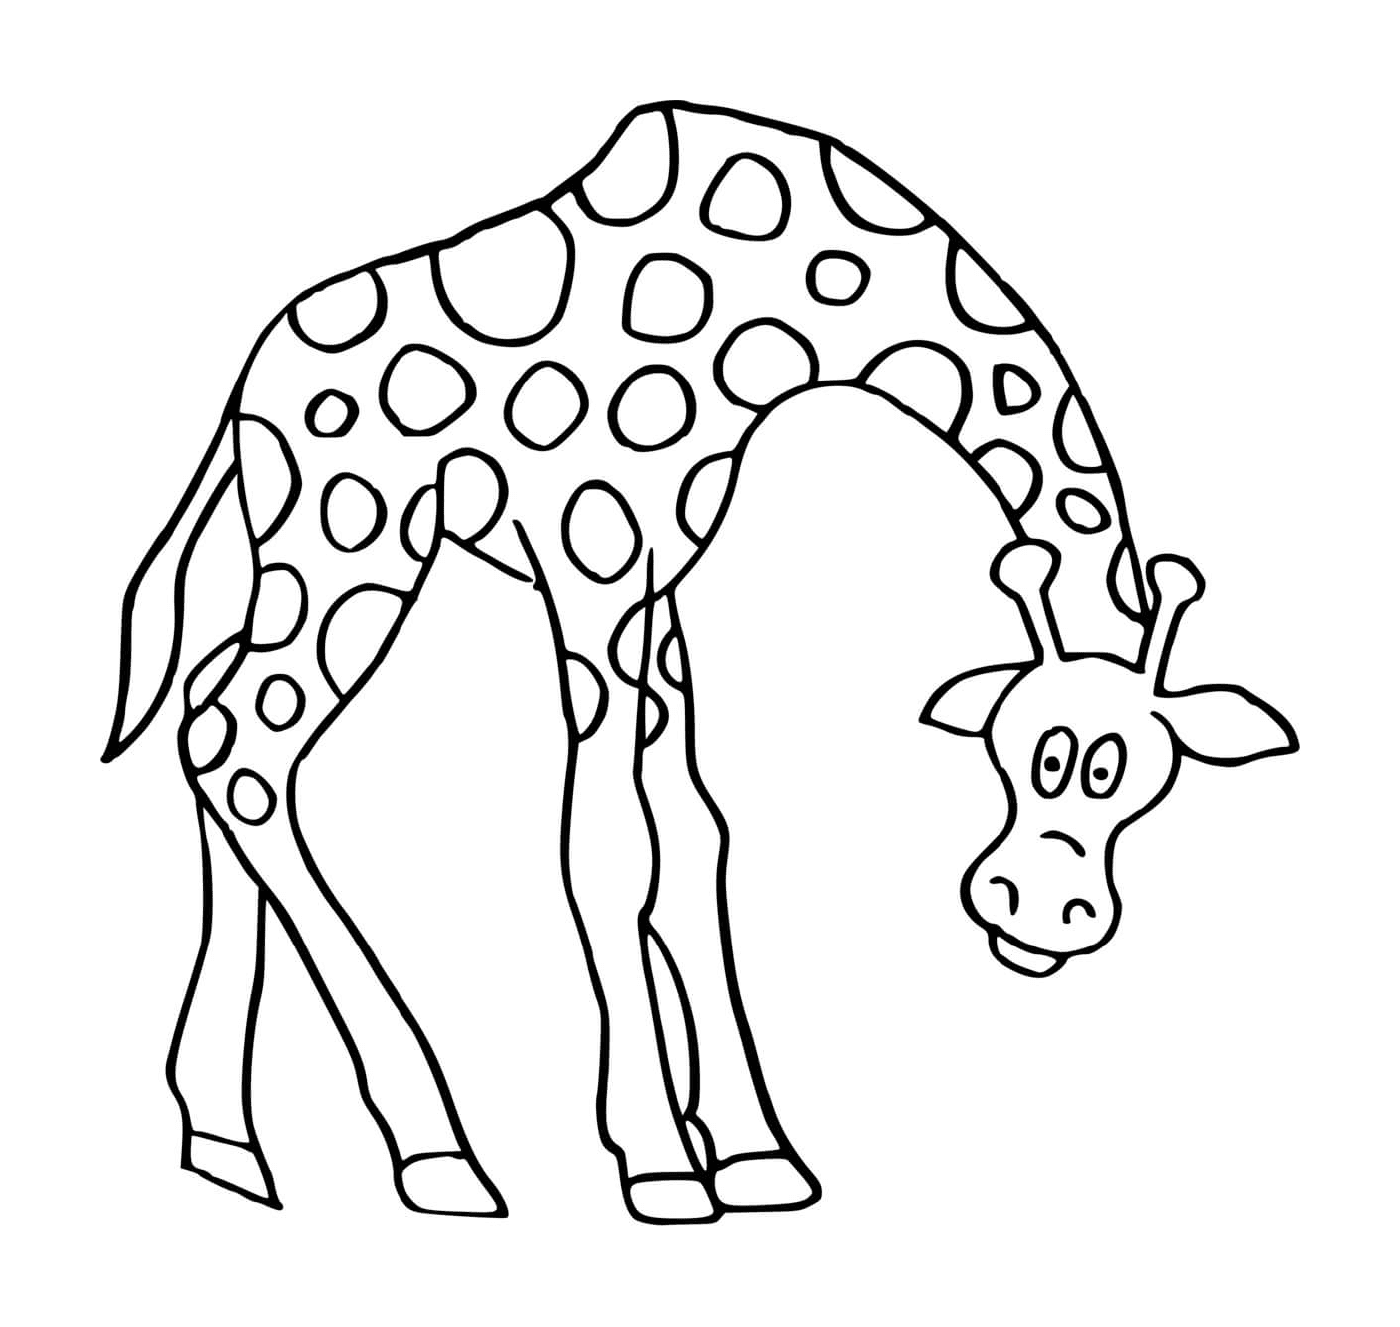  Girafe que baja la cabeza 